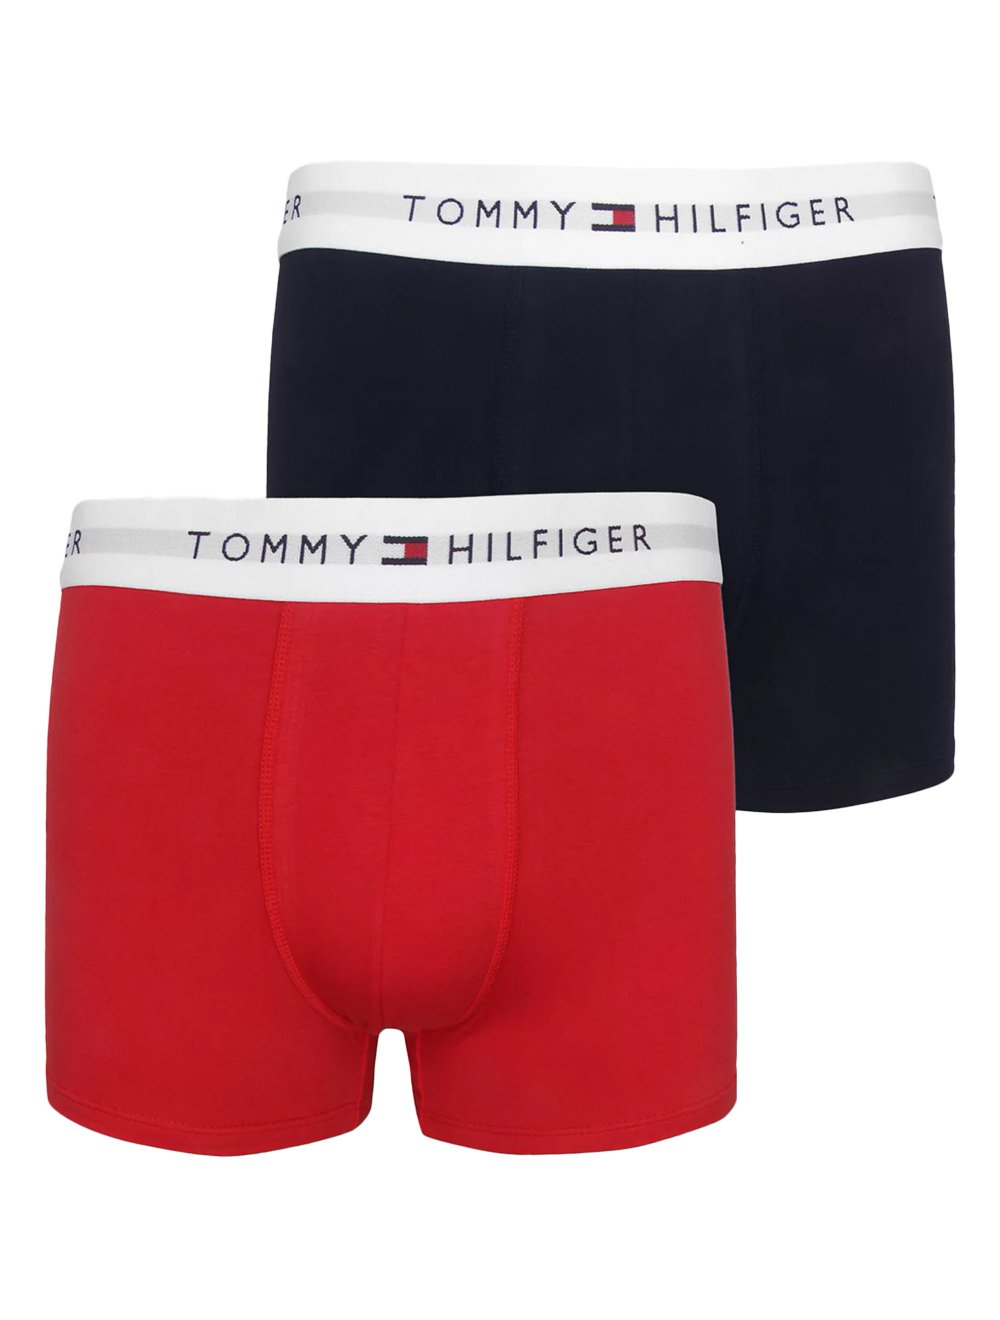 Cueca Tommy Hilfiger Cotton Stretch Boxer Trunk Vermelha/Marinho Pack 2UN